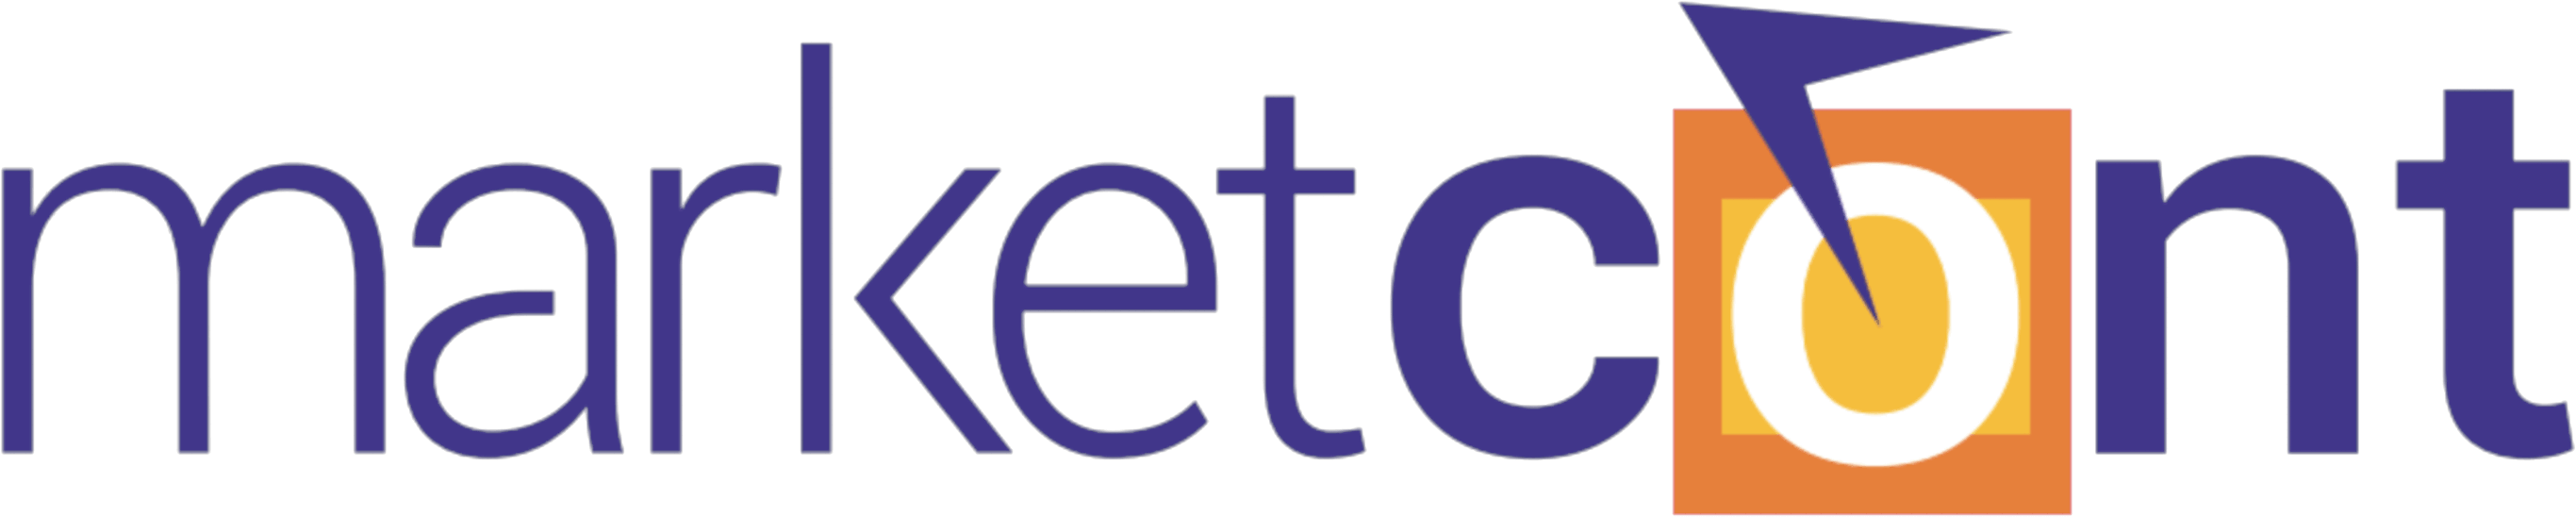 logo de marketcont